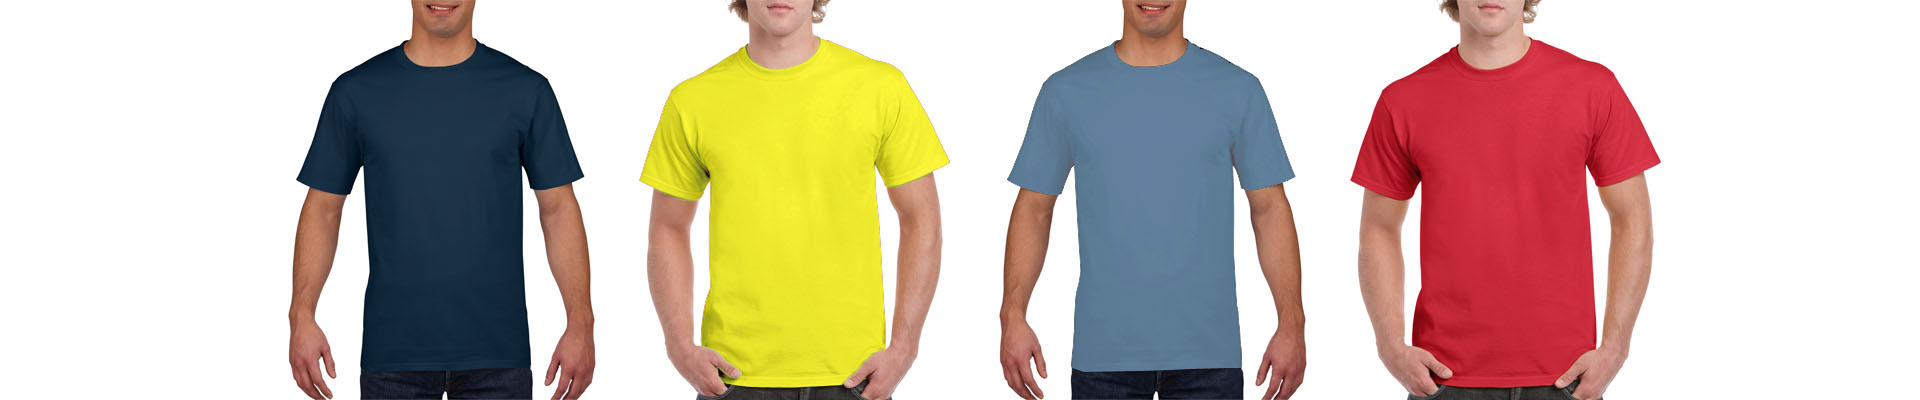 Custom Printed T Shirts